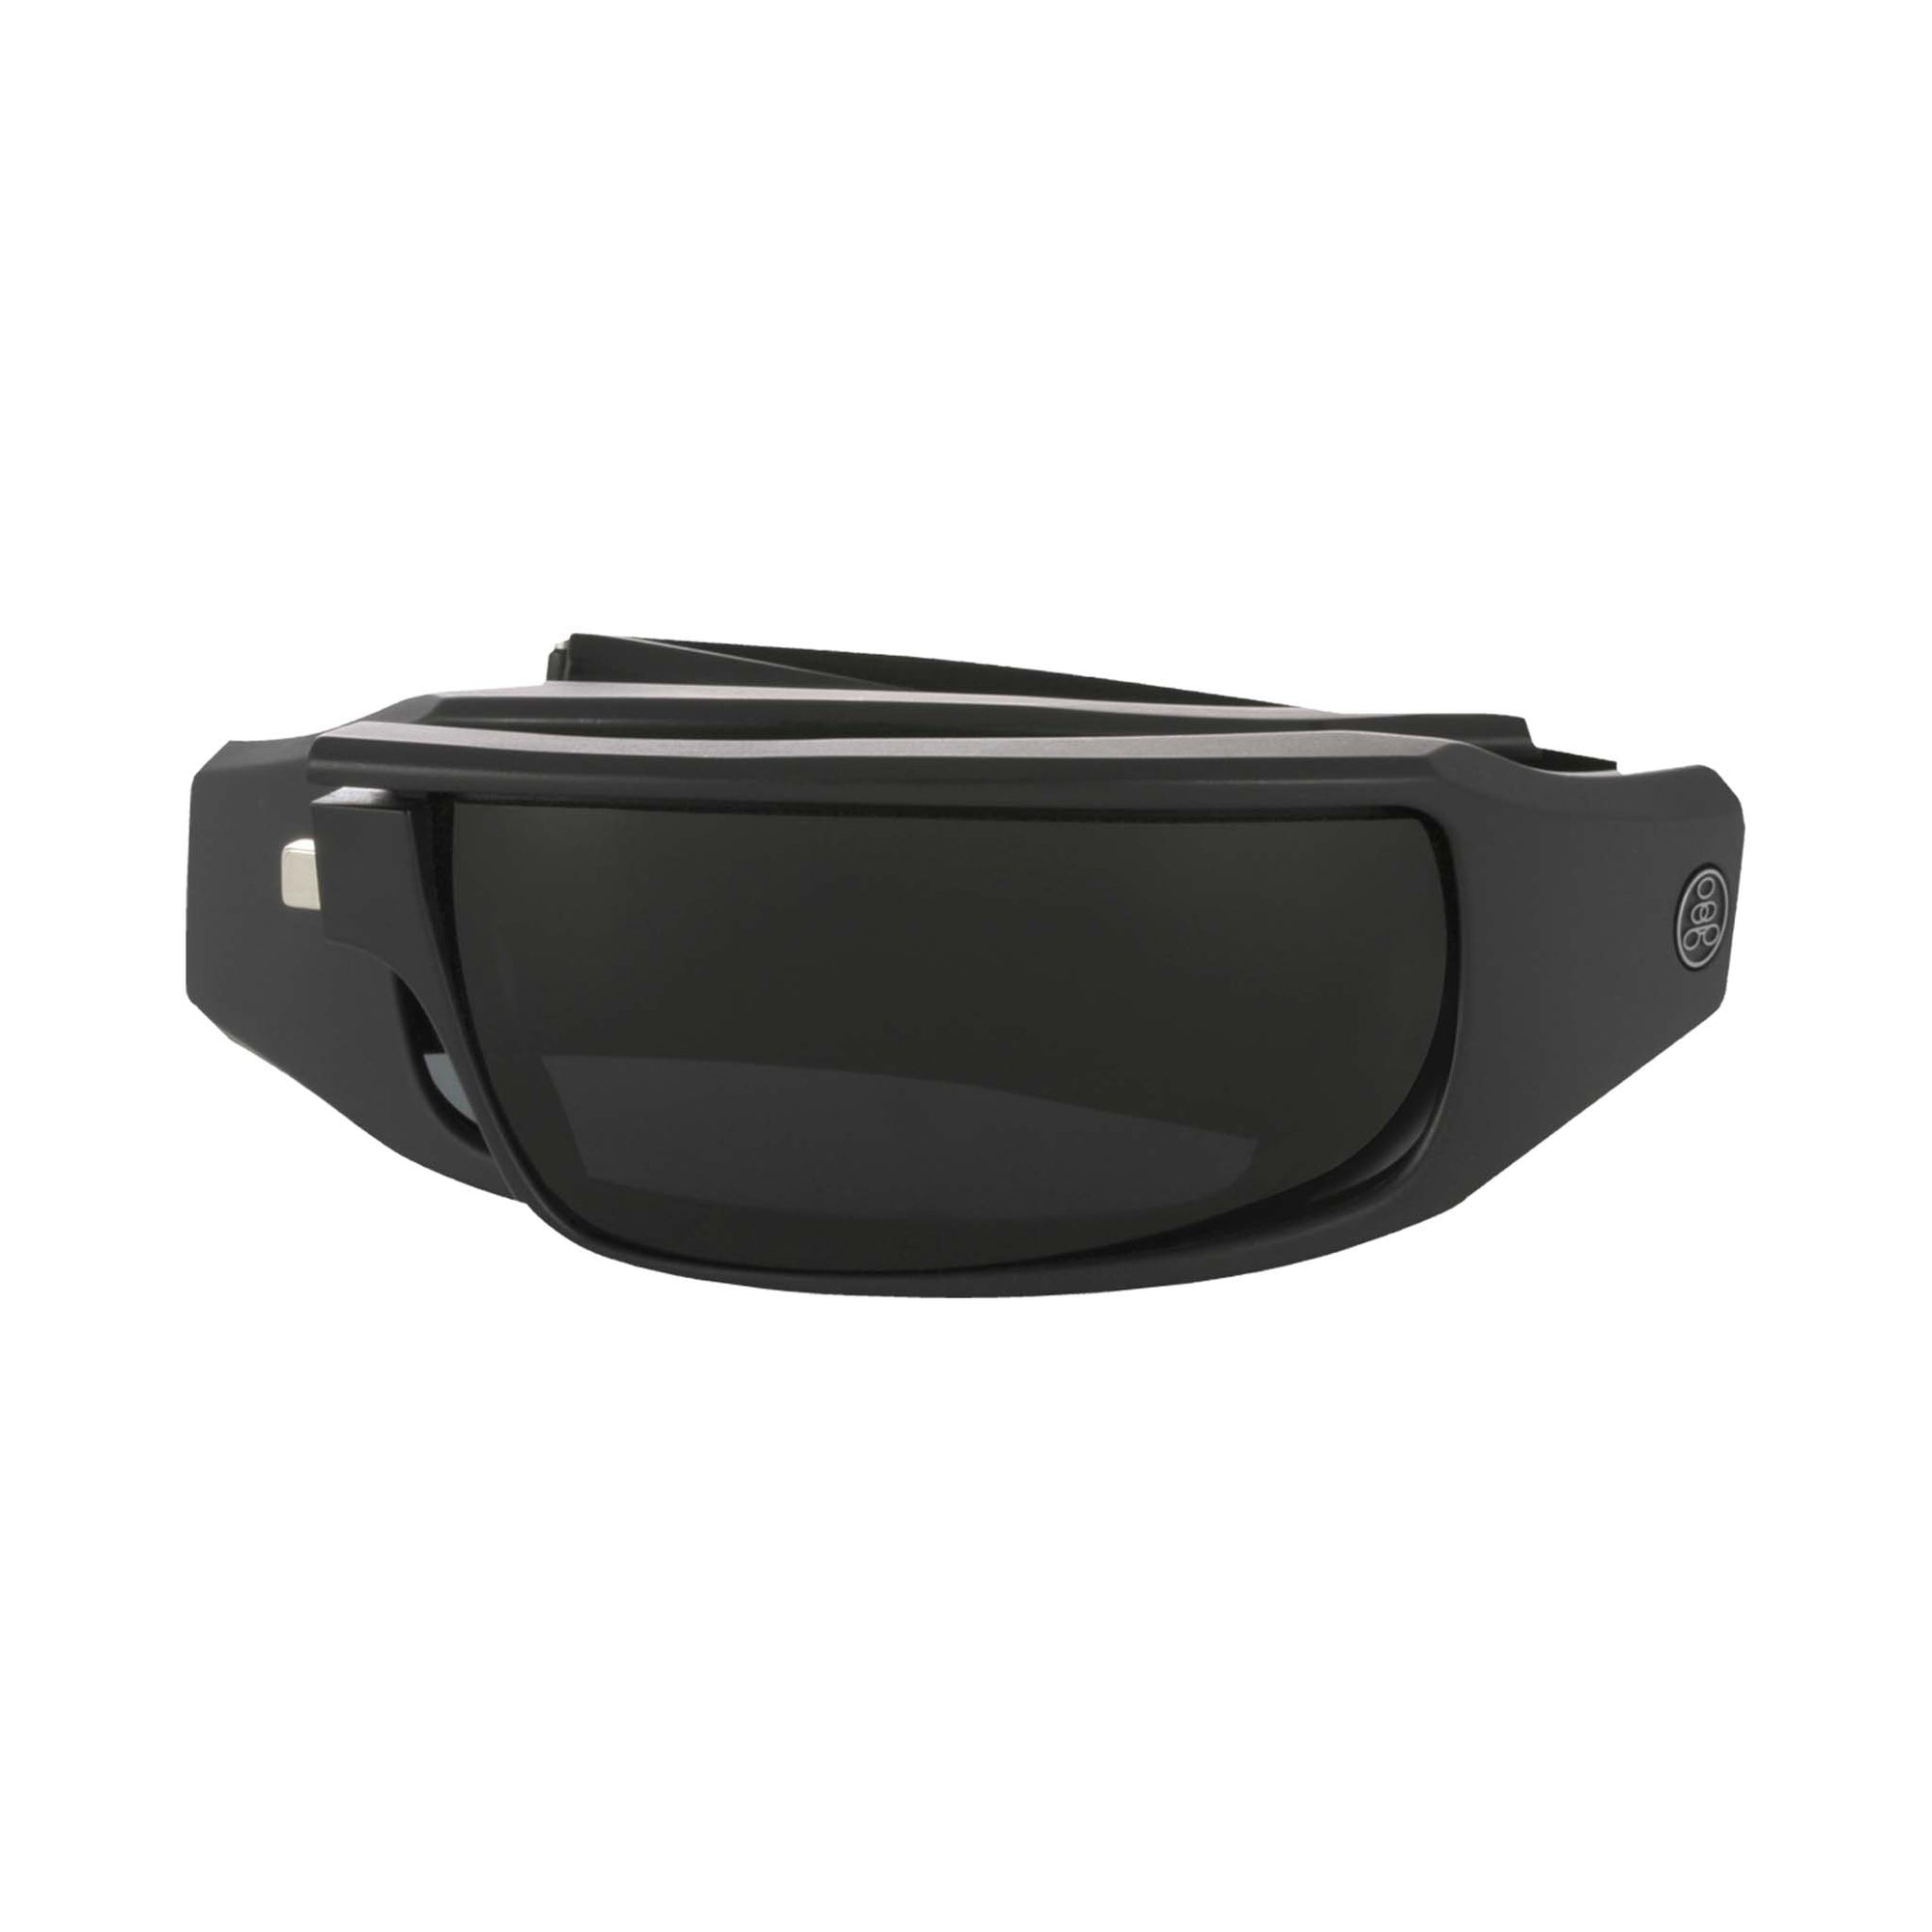 Popticals, Premium Compact Sunglasses, PopSign, 010020-BMGS, Standard Sunglasses, Matte Black Frame, Gray Lenses, Compact View